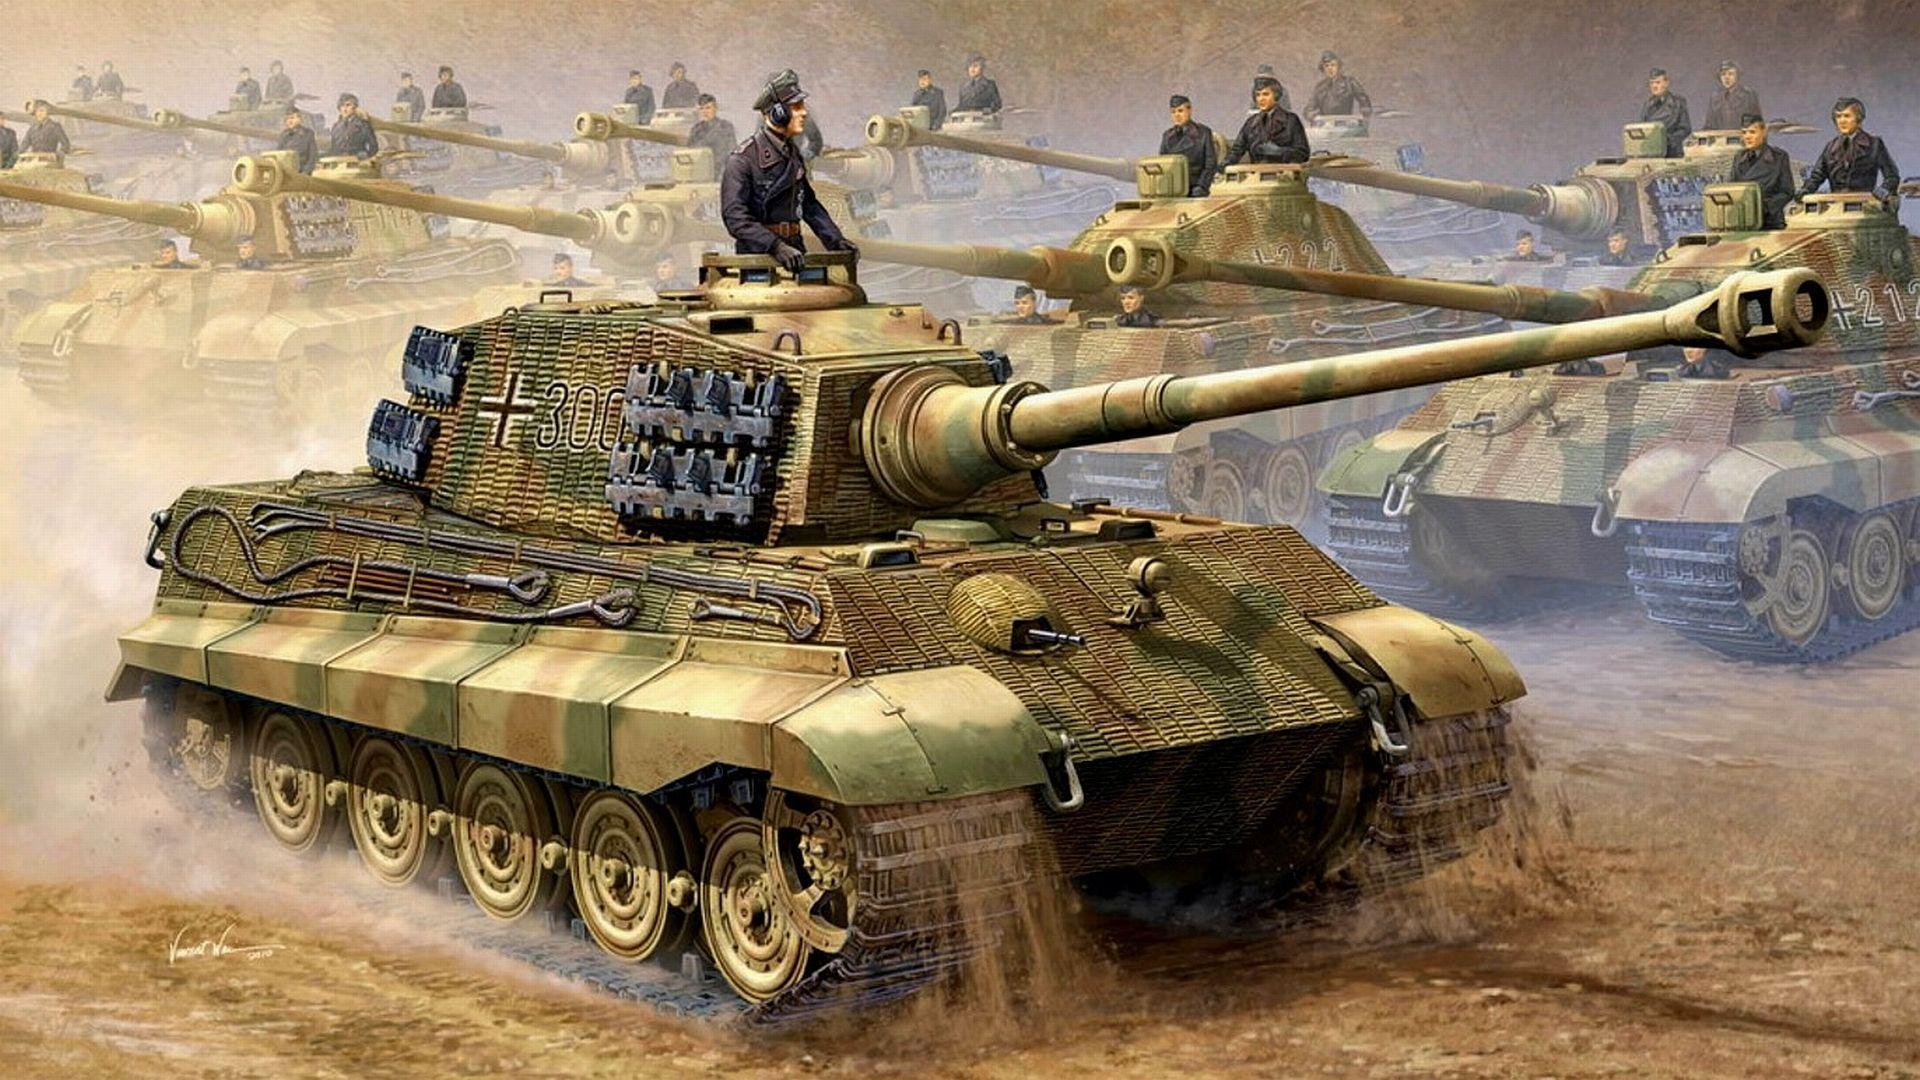 Wallpaper World of Tanks, World of Tanks Blitz, Wargaming, Tank, Heavy Tank,  Background - Download Free Image